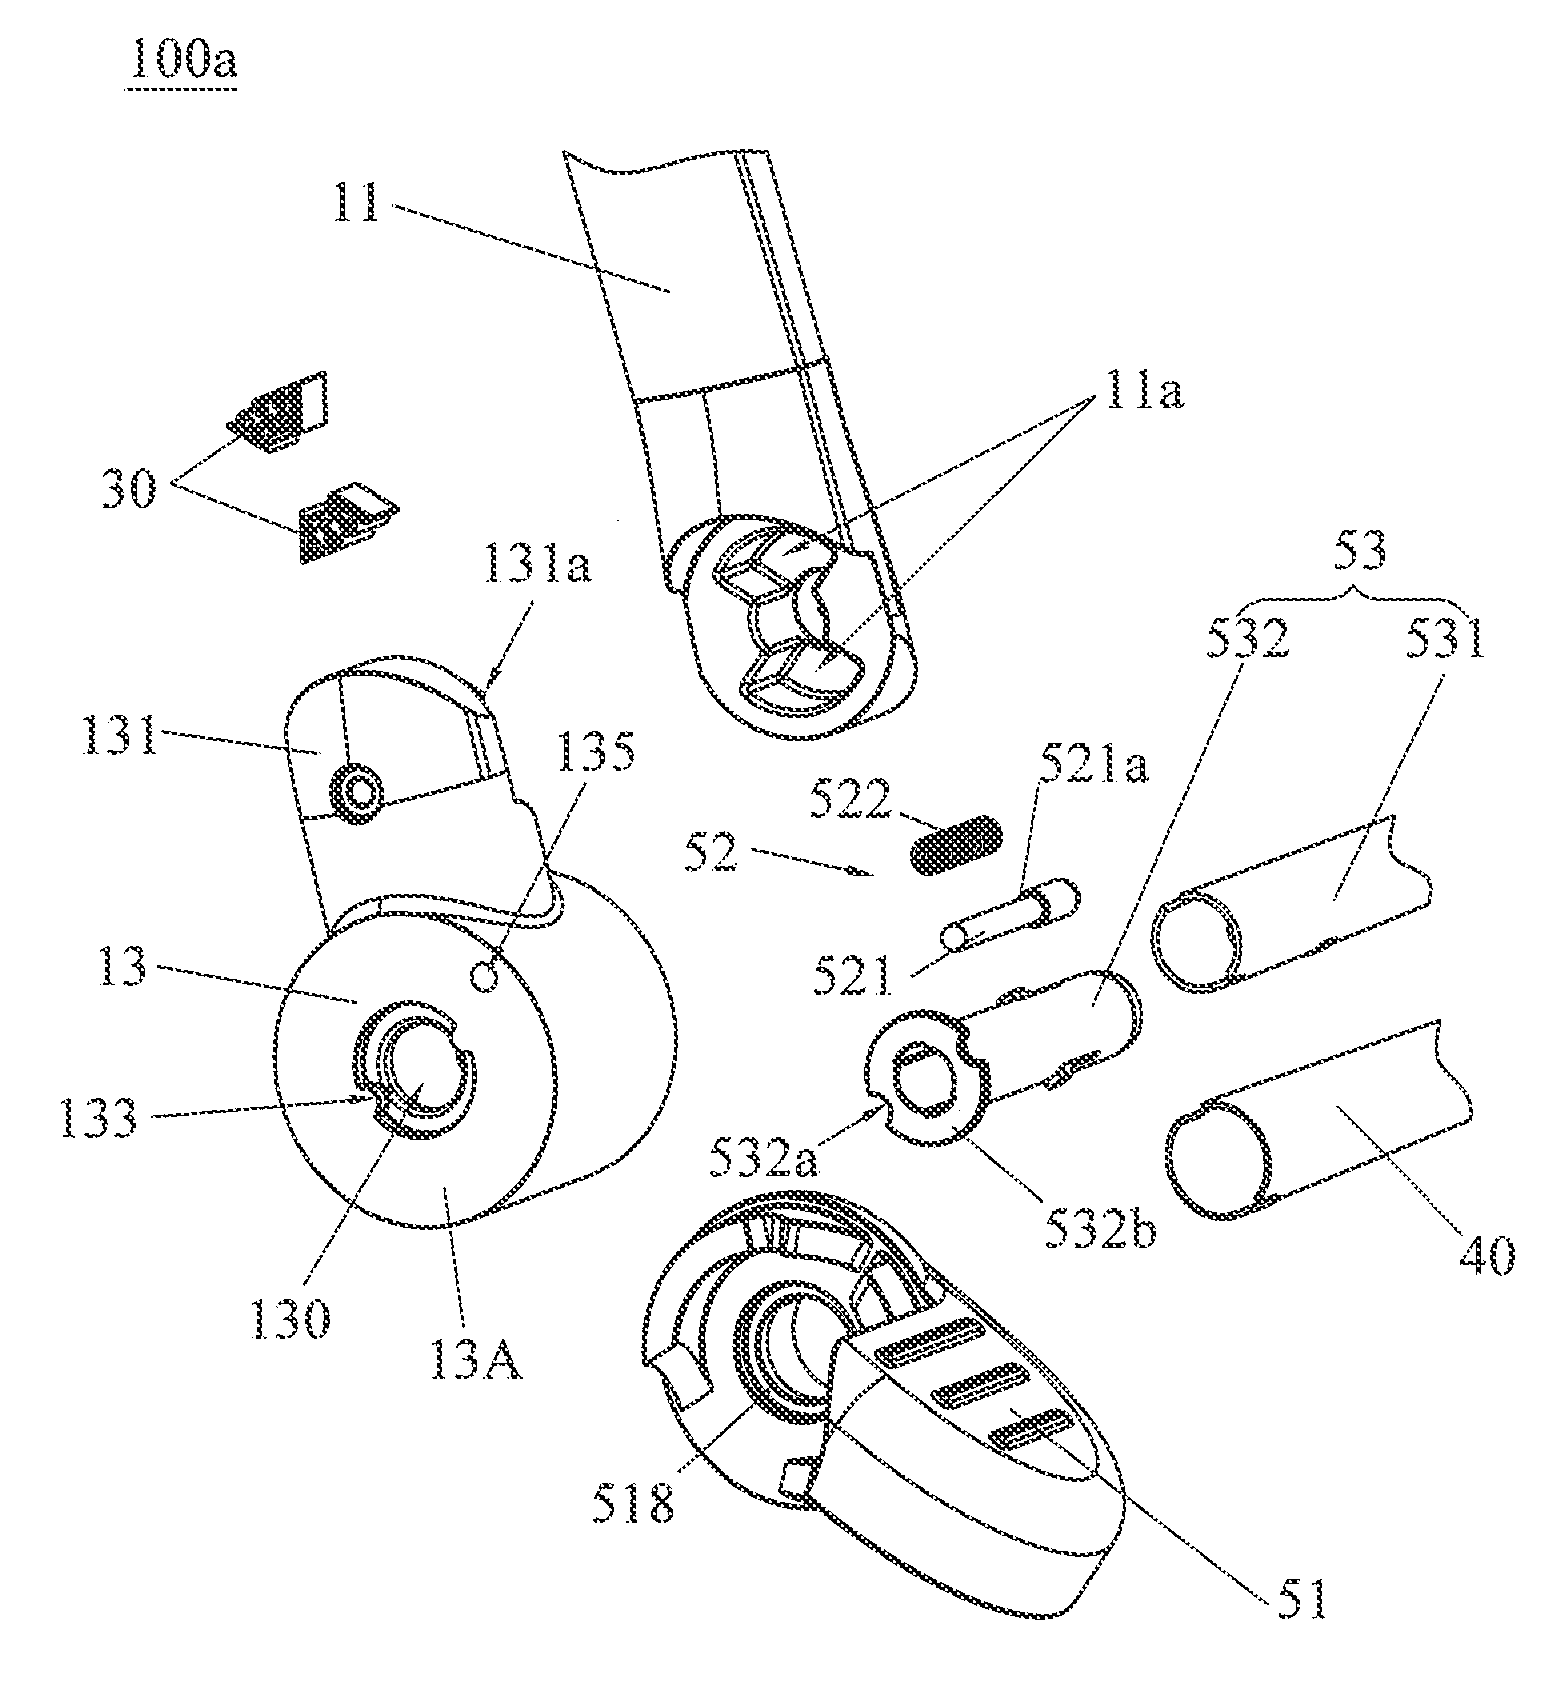 Brake mechanism for an infant stroller apparatus